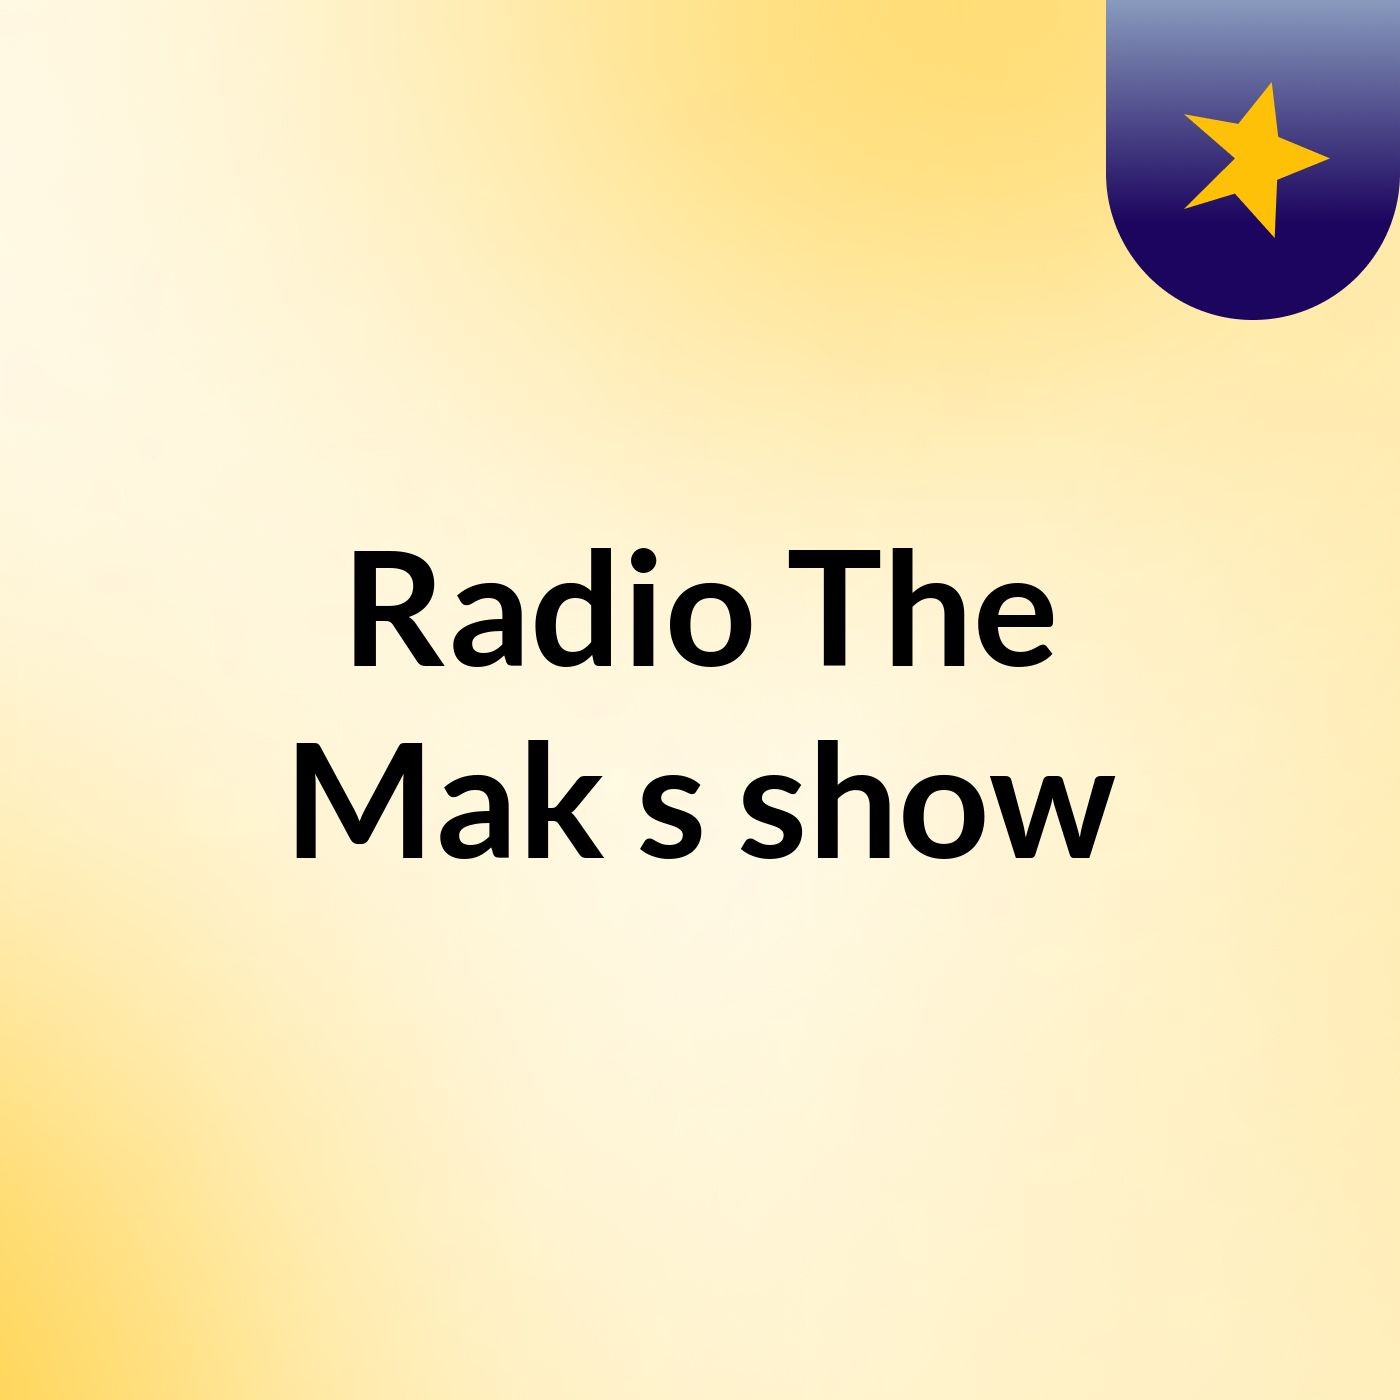 Radio The Mak's show